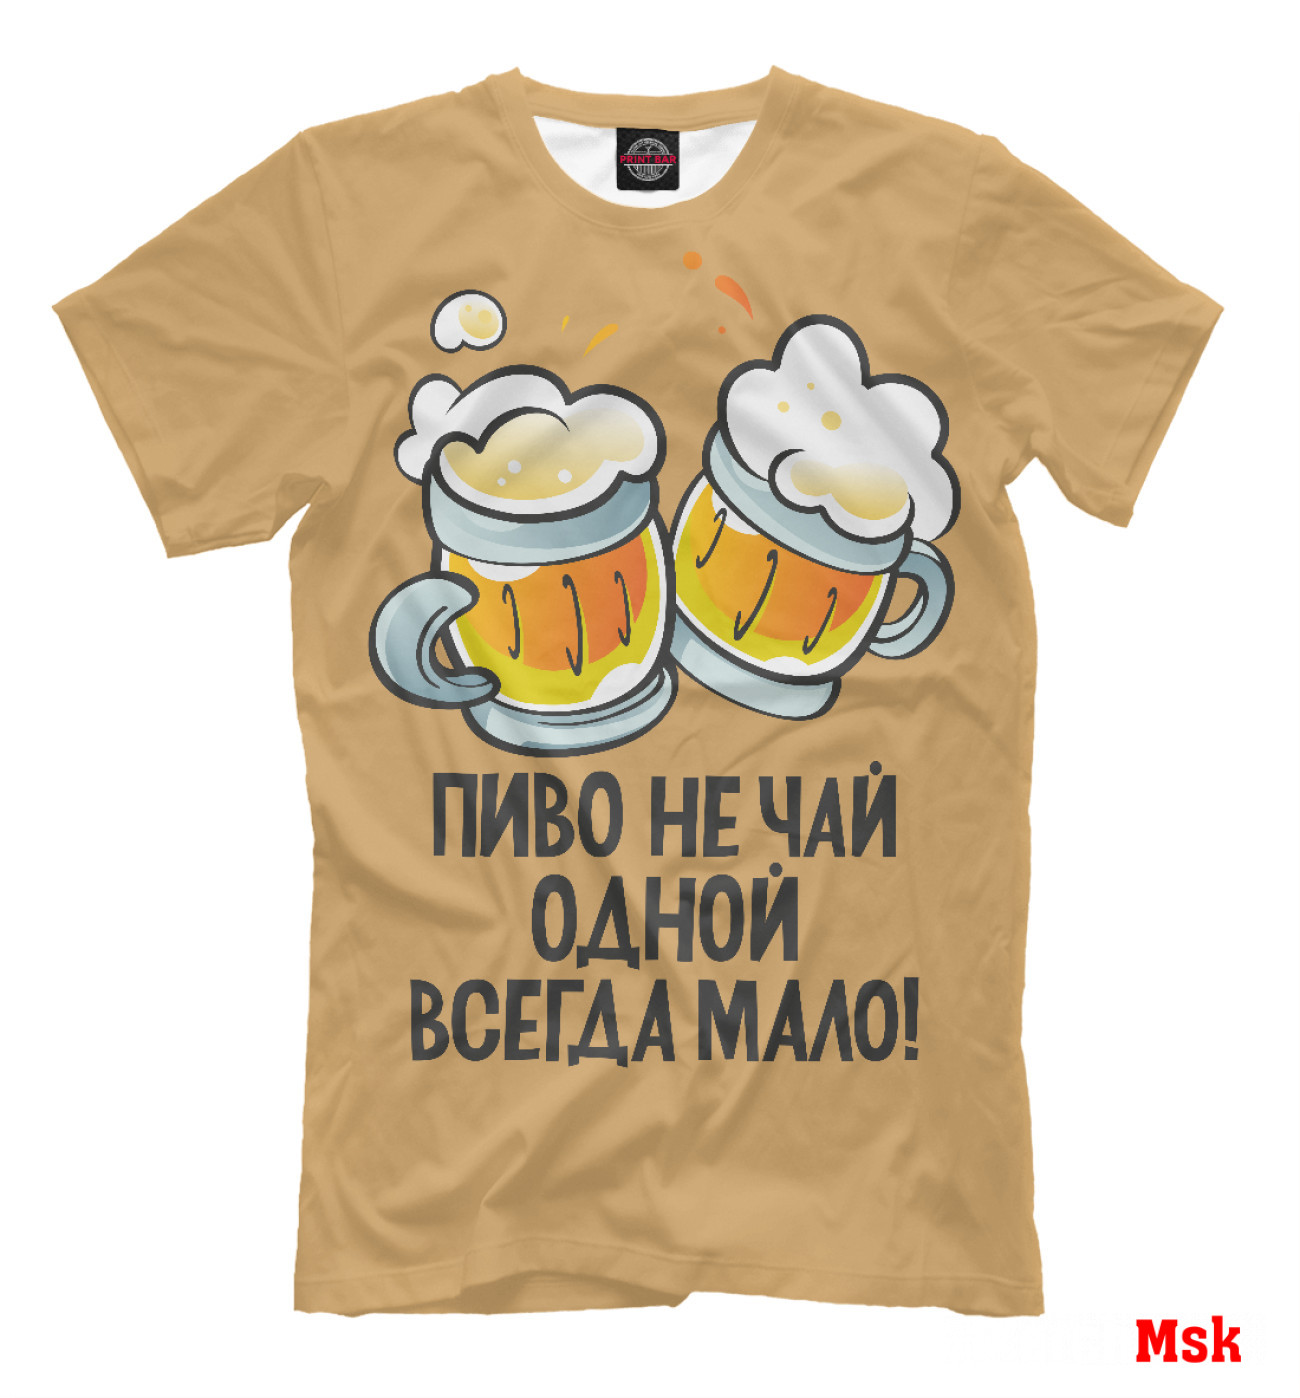 Мужская Футболка Пиво - это Вам не чай!, артикул: PIV-879124-fut-2